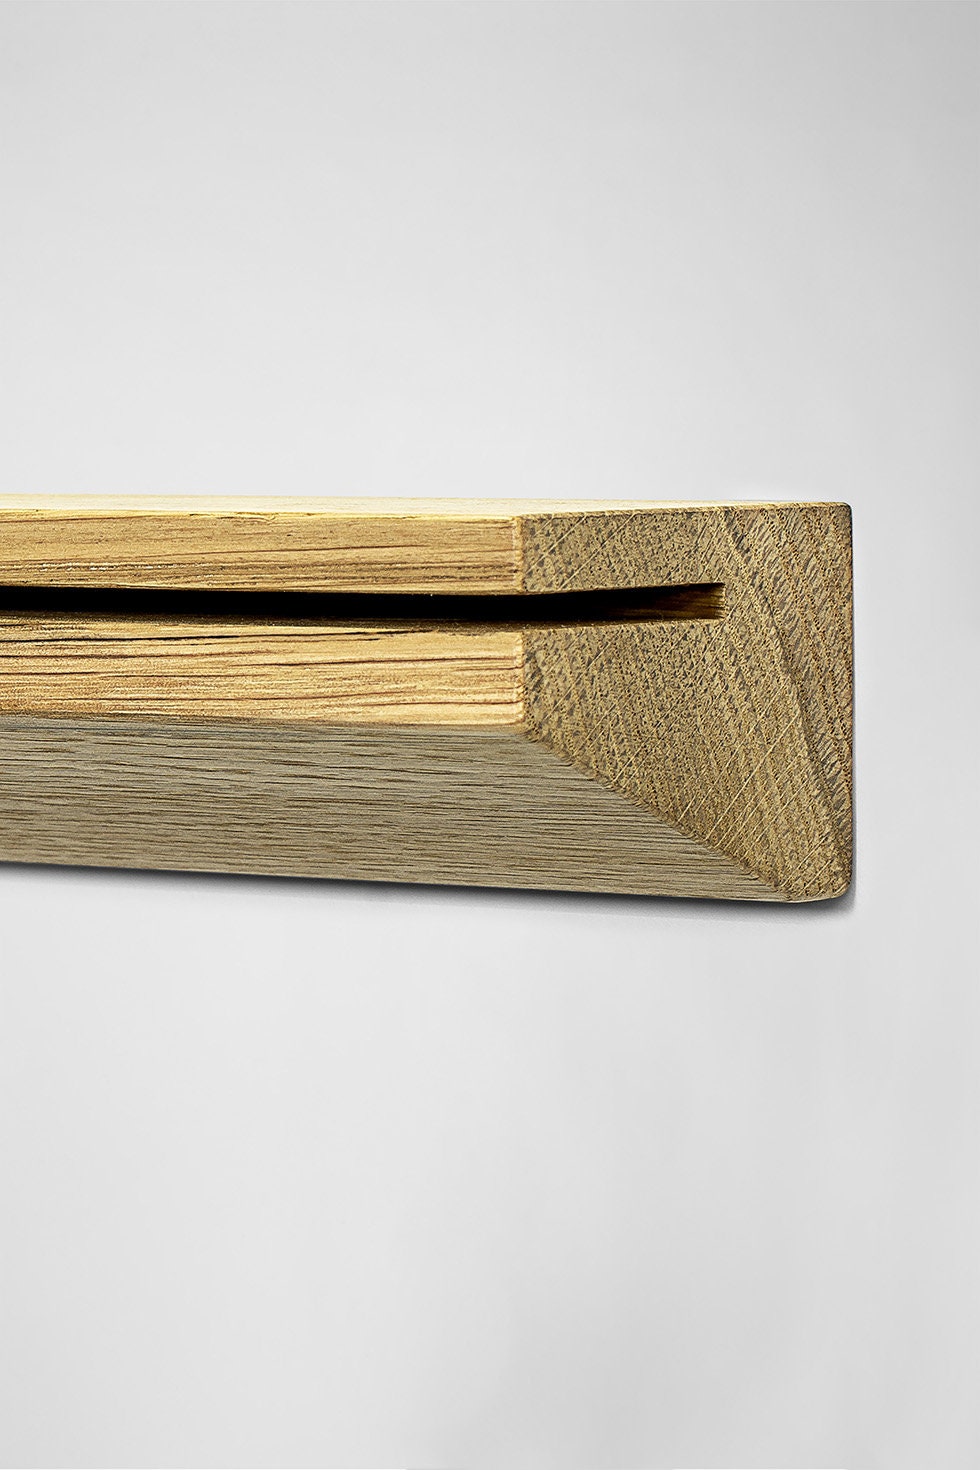 Key holder made from sustainable oak wood